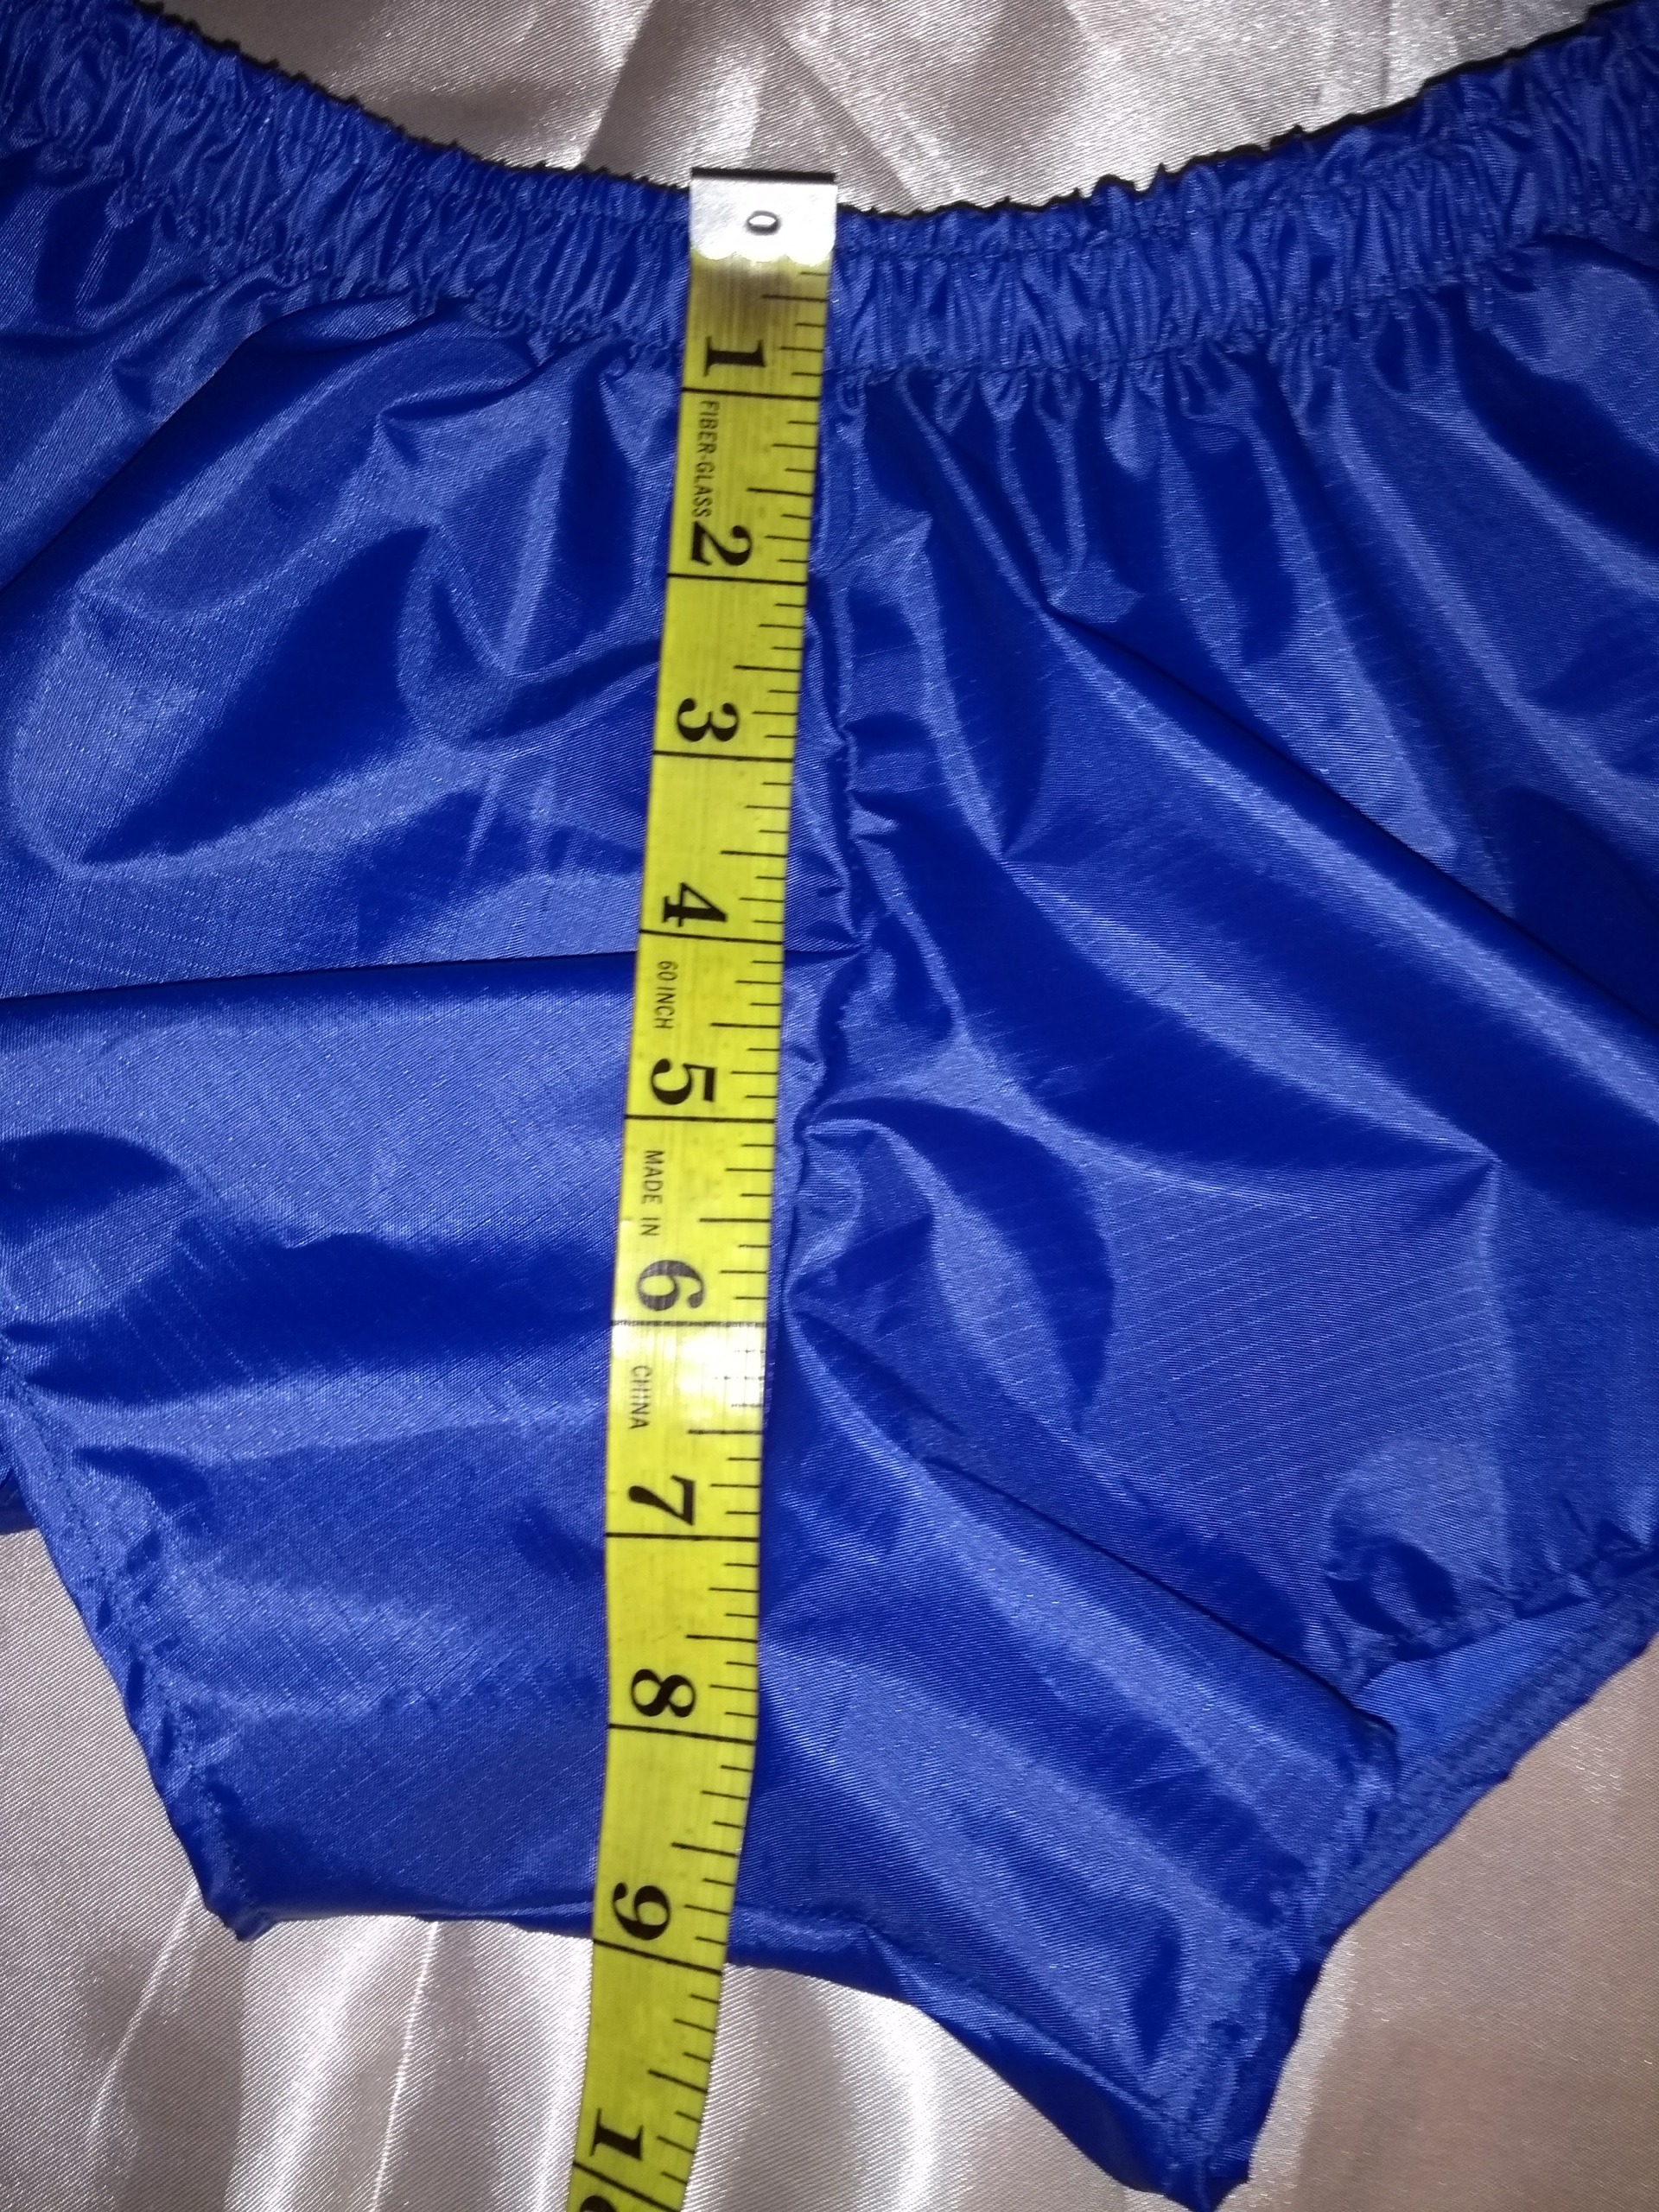 Royal blue ripstop nylon footy shorts with white trim (L)